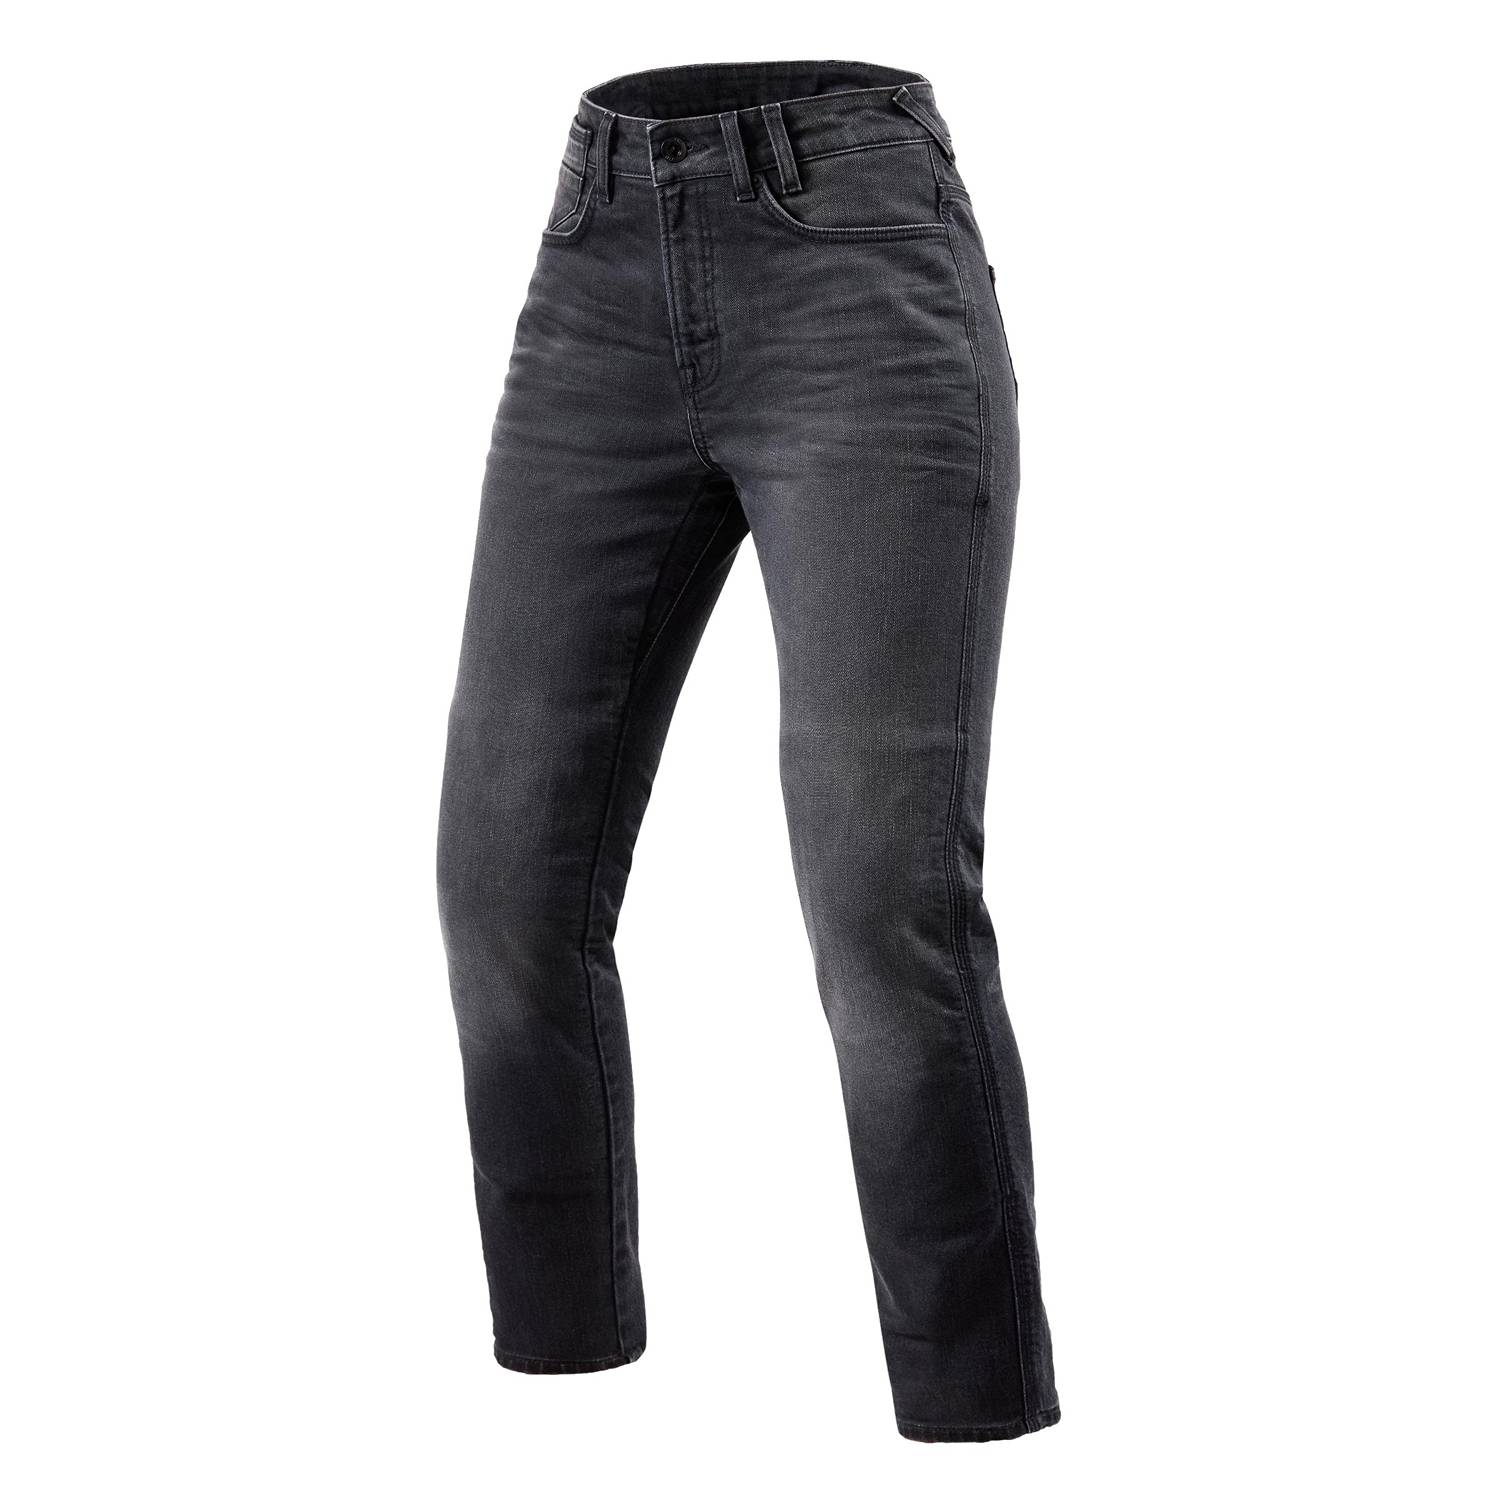 Image of REV'IT! Jeans Victoria 2 Ladies SF Mid Grey Used Motorcycle Jeans Size L30/W27 EN